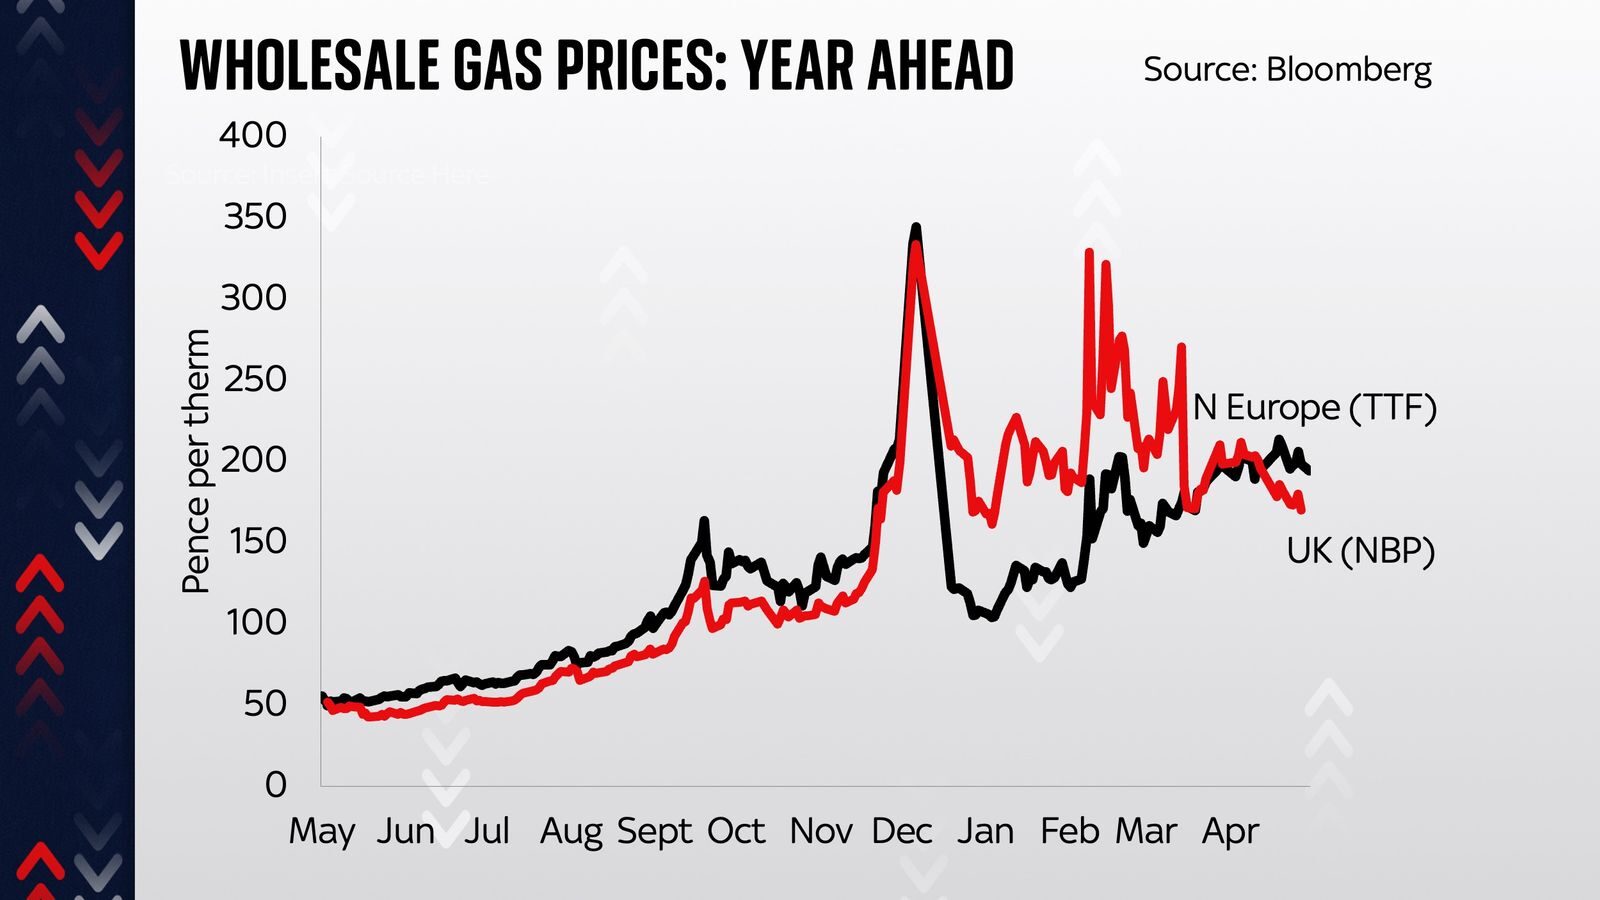 UK gas prices